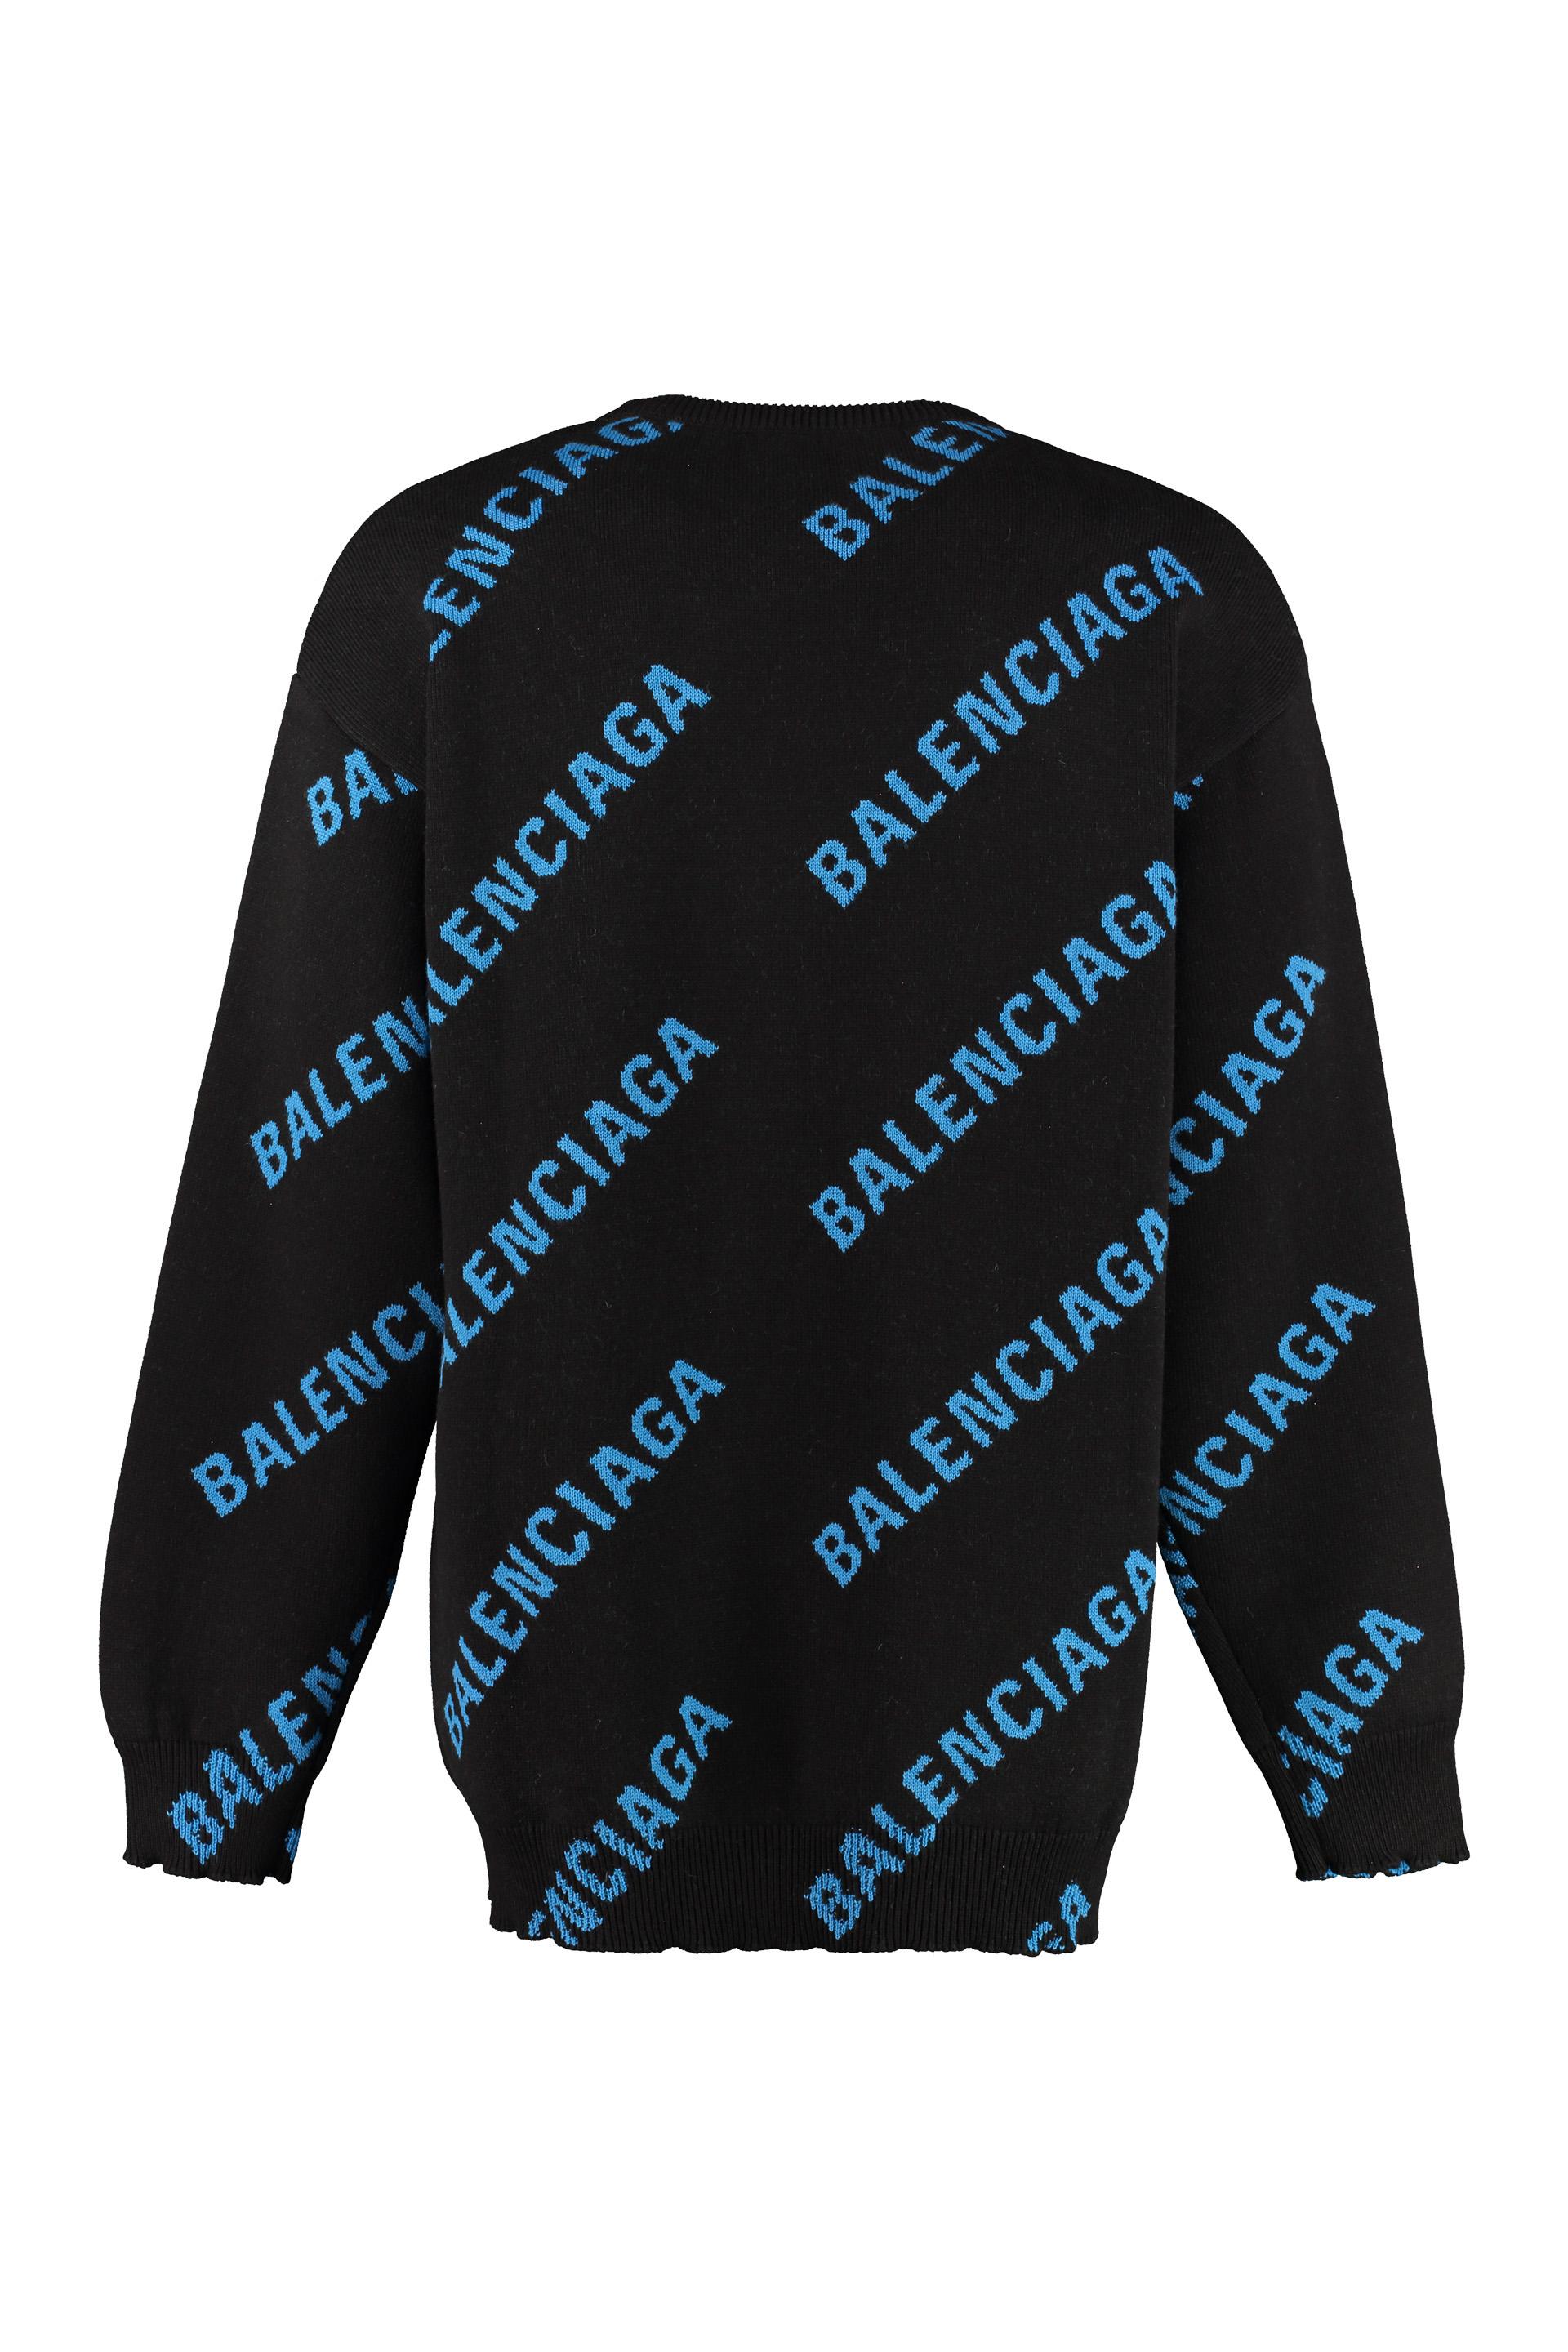 Balenciaga Cotton Jacquard Crew-neck Sweater in Black for Men - Lyst